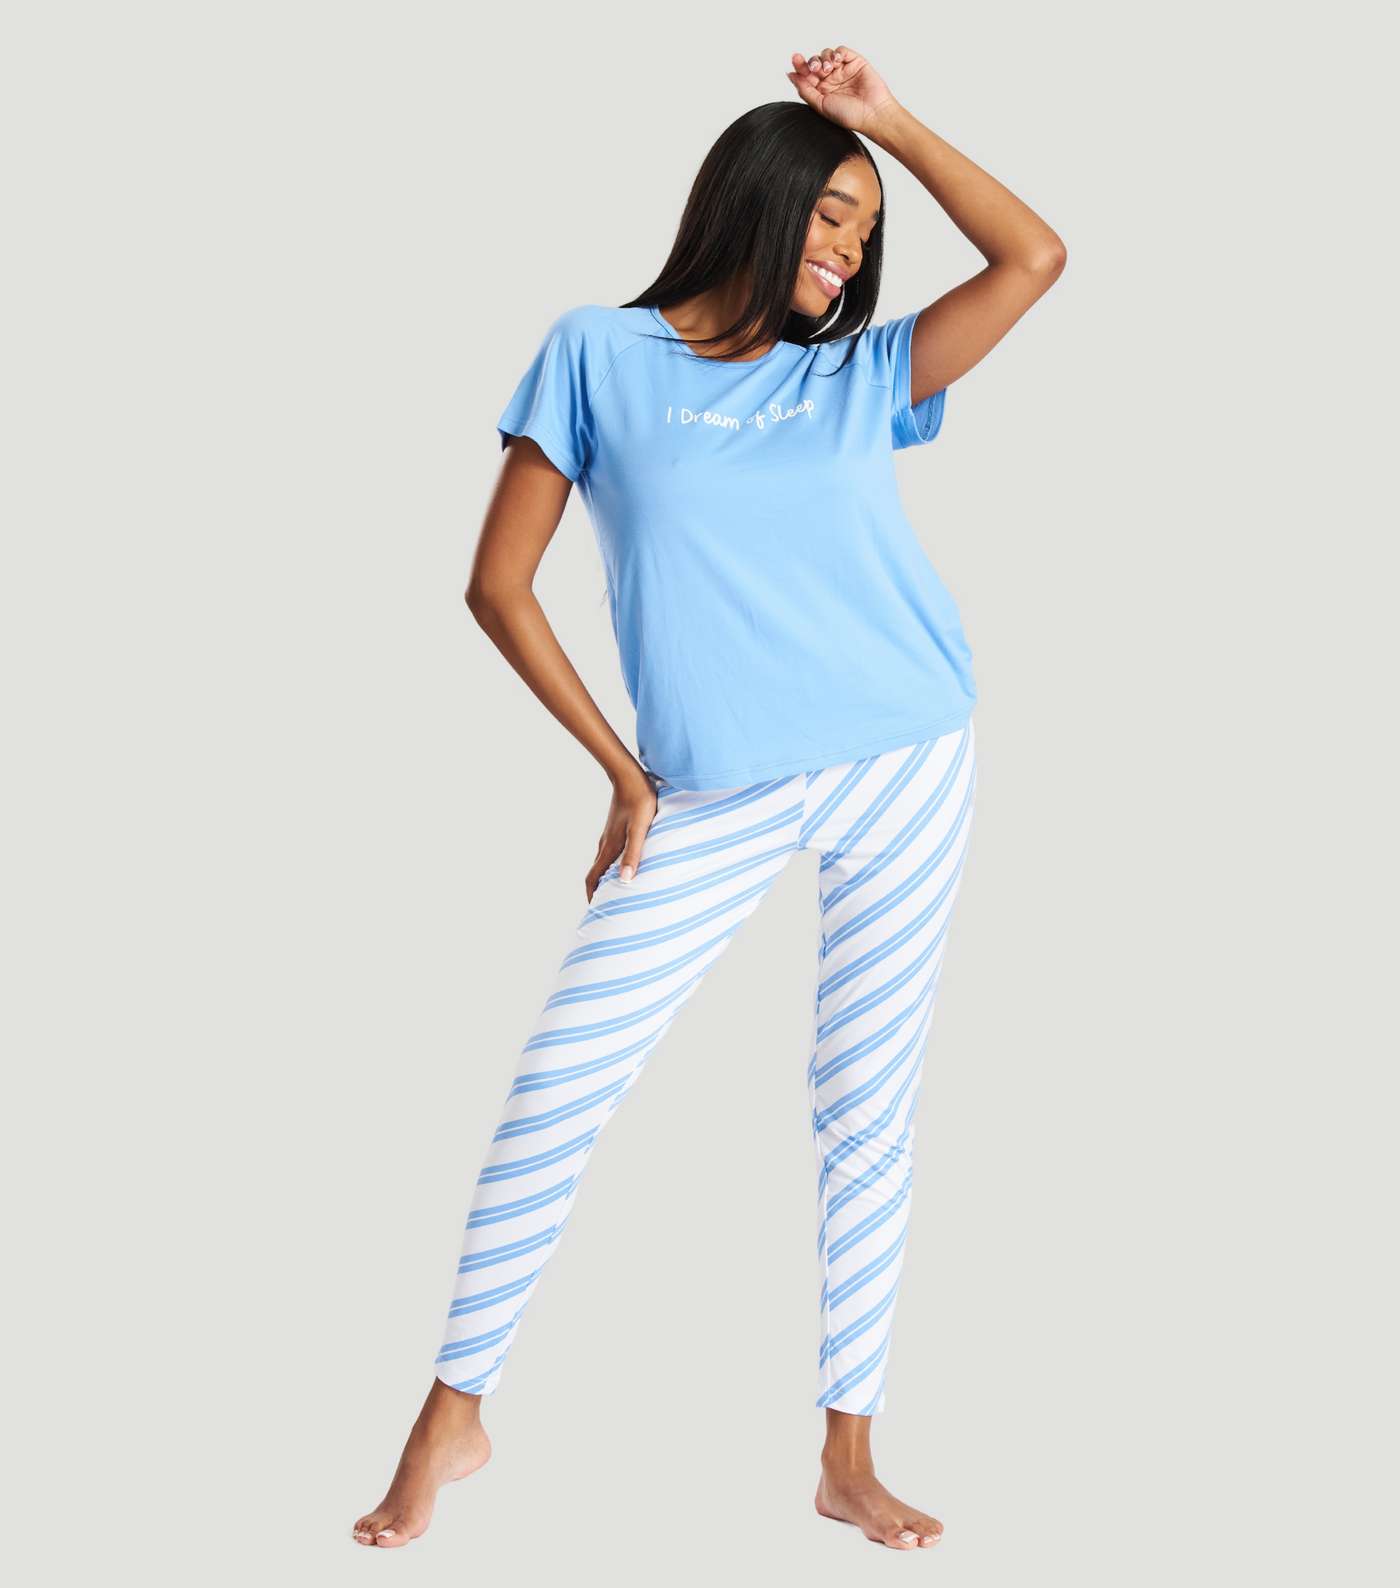 Loungeable Blue Jogger Pyjama Set with Dream Logo Image 3